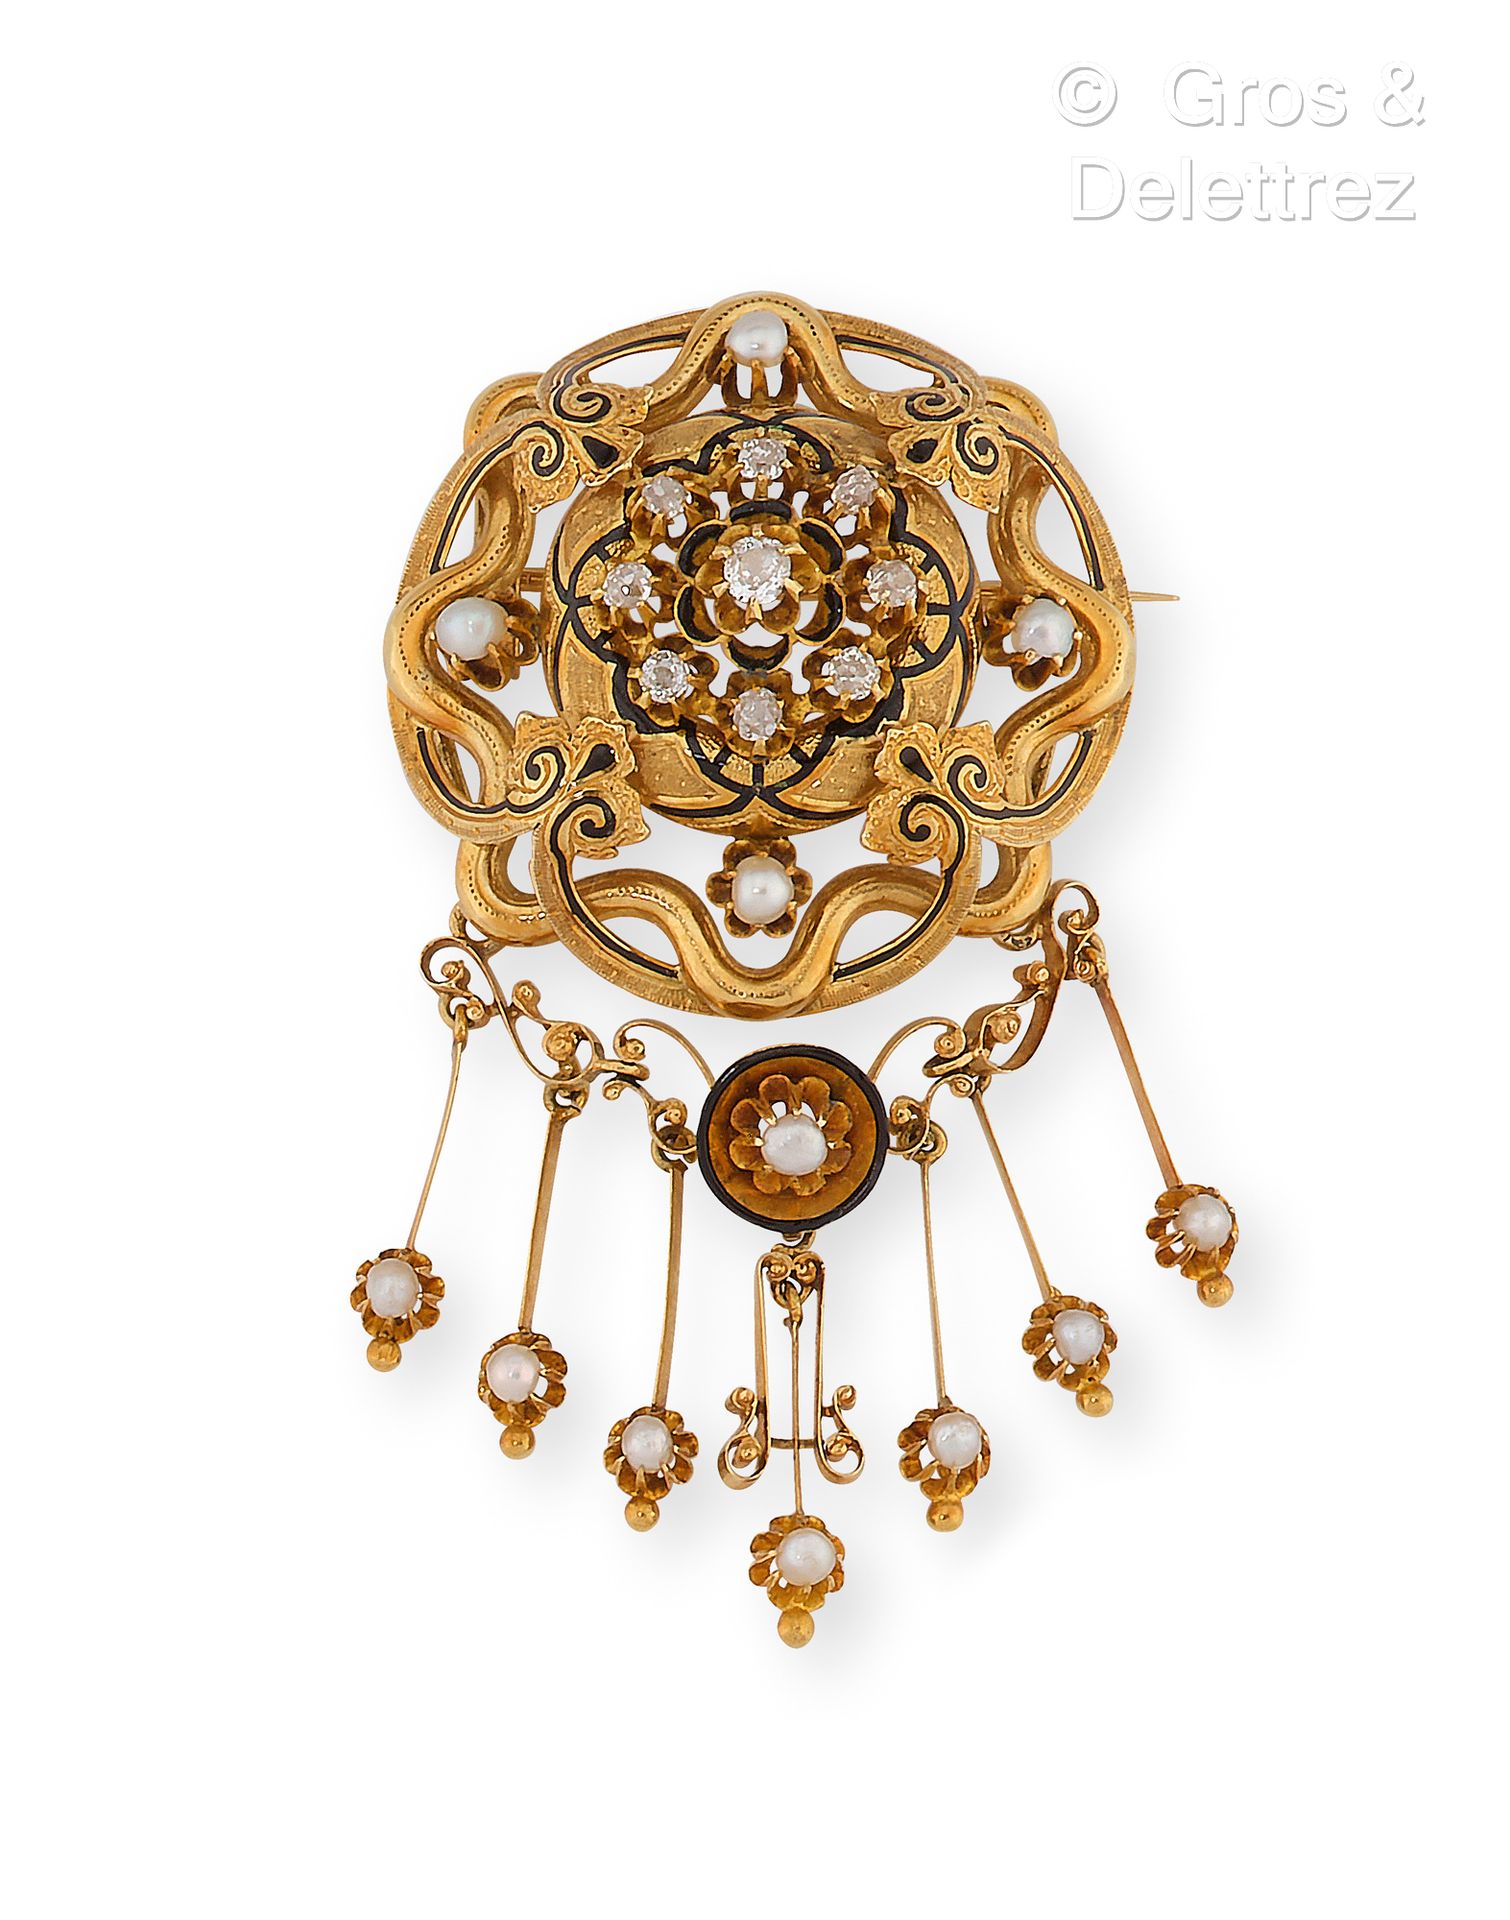 Null 一枚黄金 "Rosace "胸针，由部分黑色珐琅交错组成，上面有旧切割钻石和珍珠。19世纪的作品，拿破仑三世时期。尺寸：7.2 x 3.8厘米。毛重：&hellip;